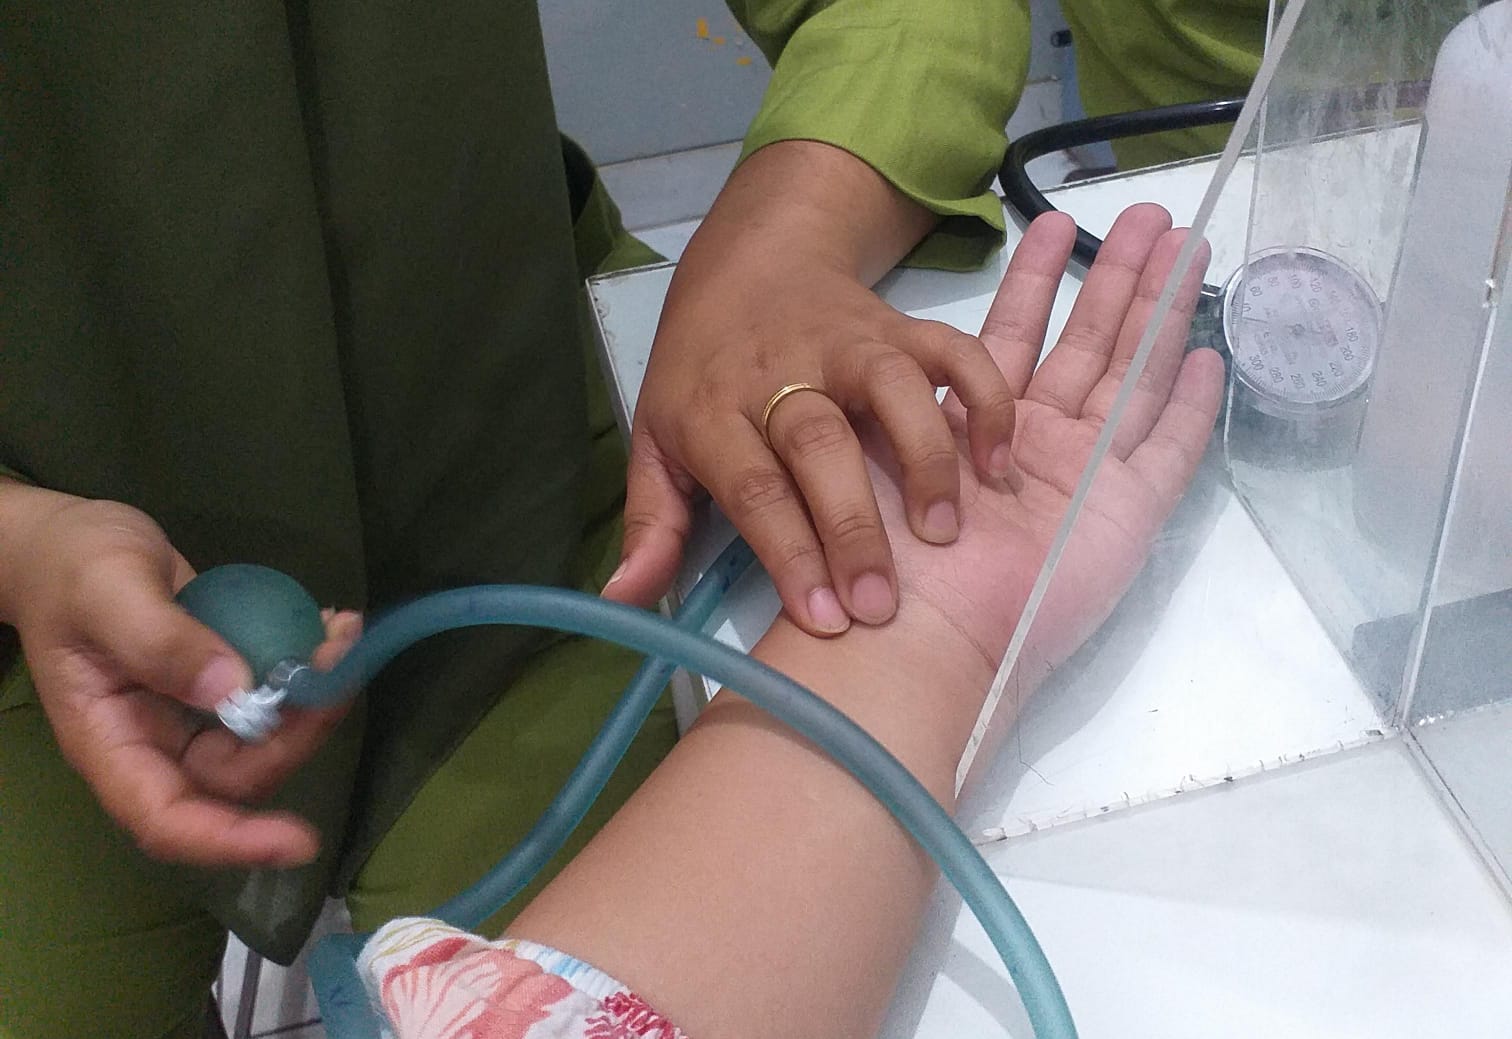 Urgent, Pasokan Darah Gol A Menipis, Ayo Donor Darah ke PMI Lampung